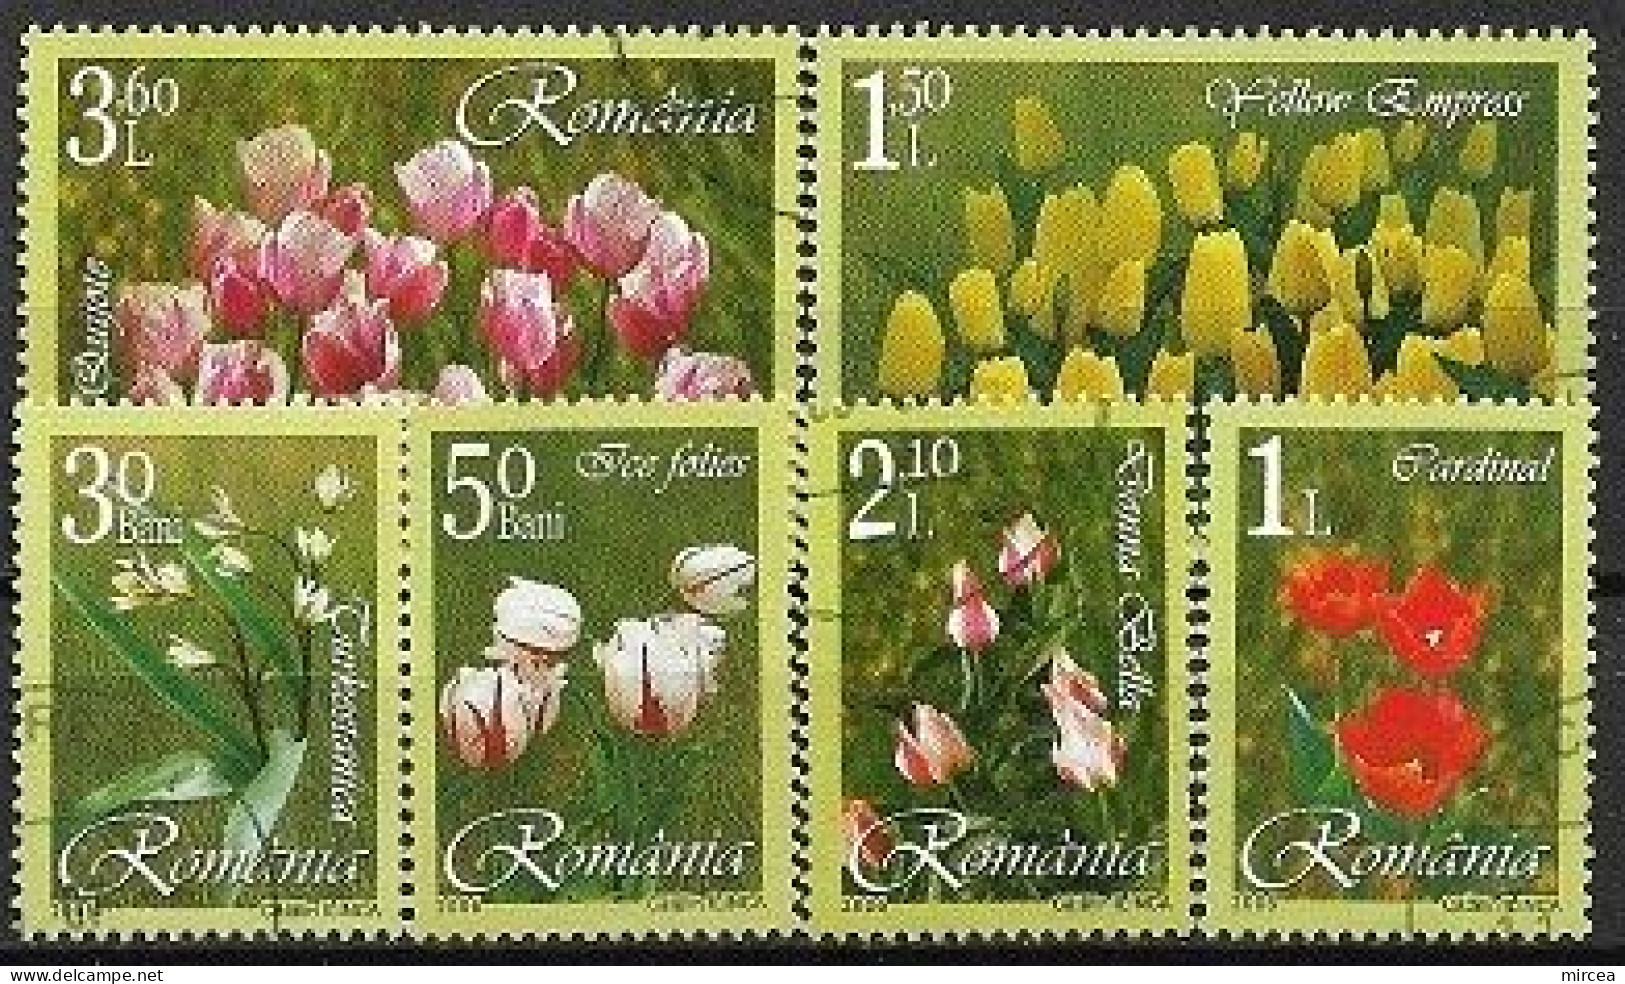 C3990 - Roumanie 2006 - Fleurs 6v.obliteres - Gebraucht